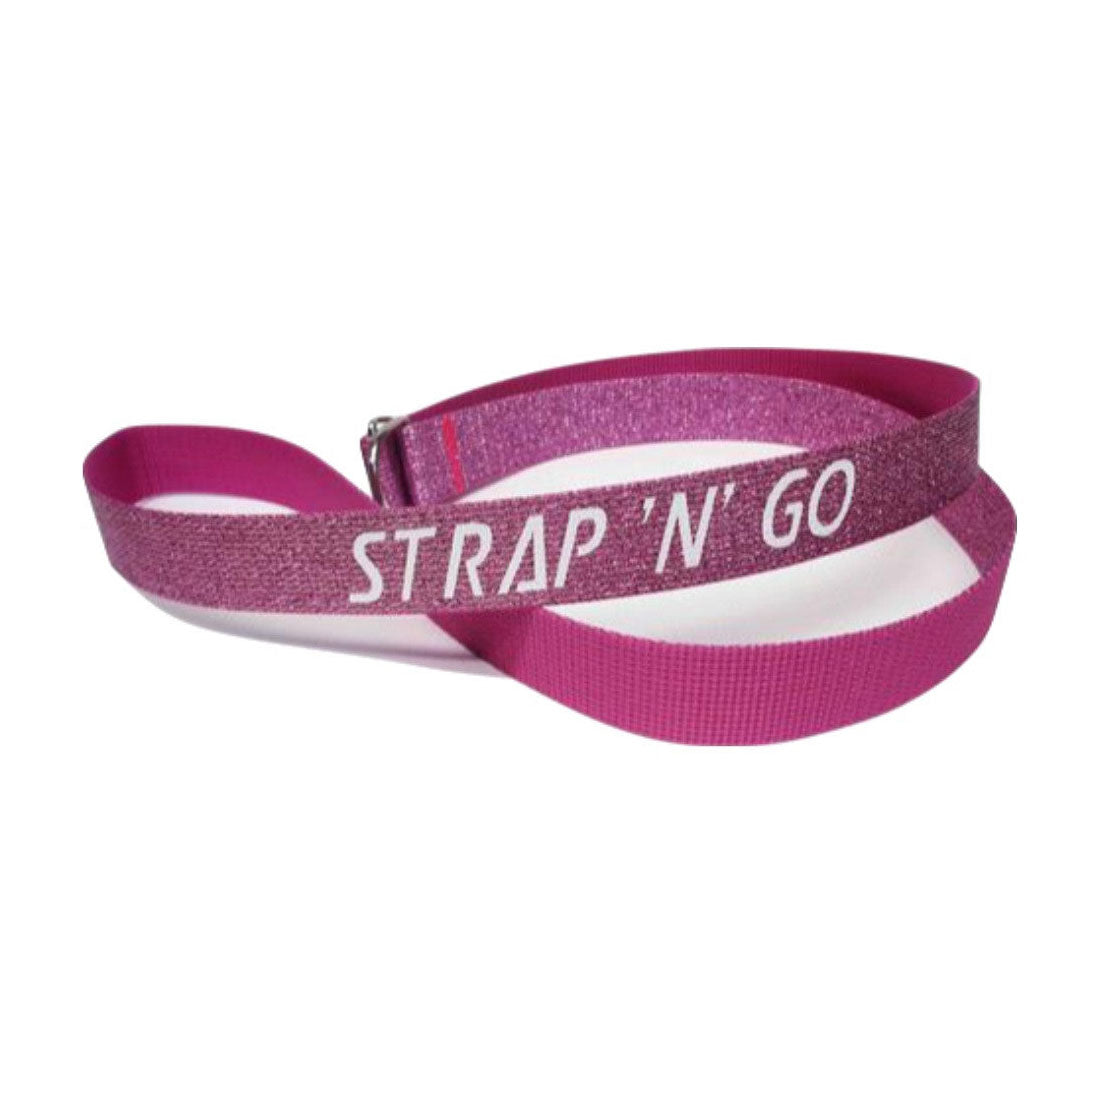 Strap N Go Skate Noose/Leash - Glitter Glitter Lilac Pink Roller Skate Accessories